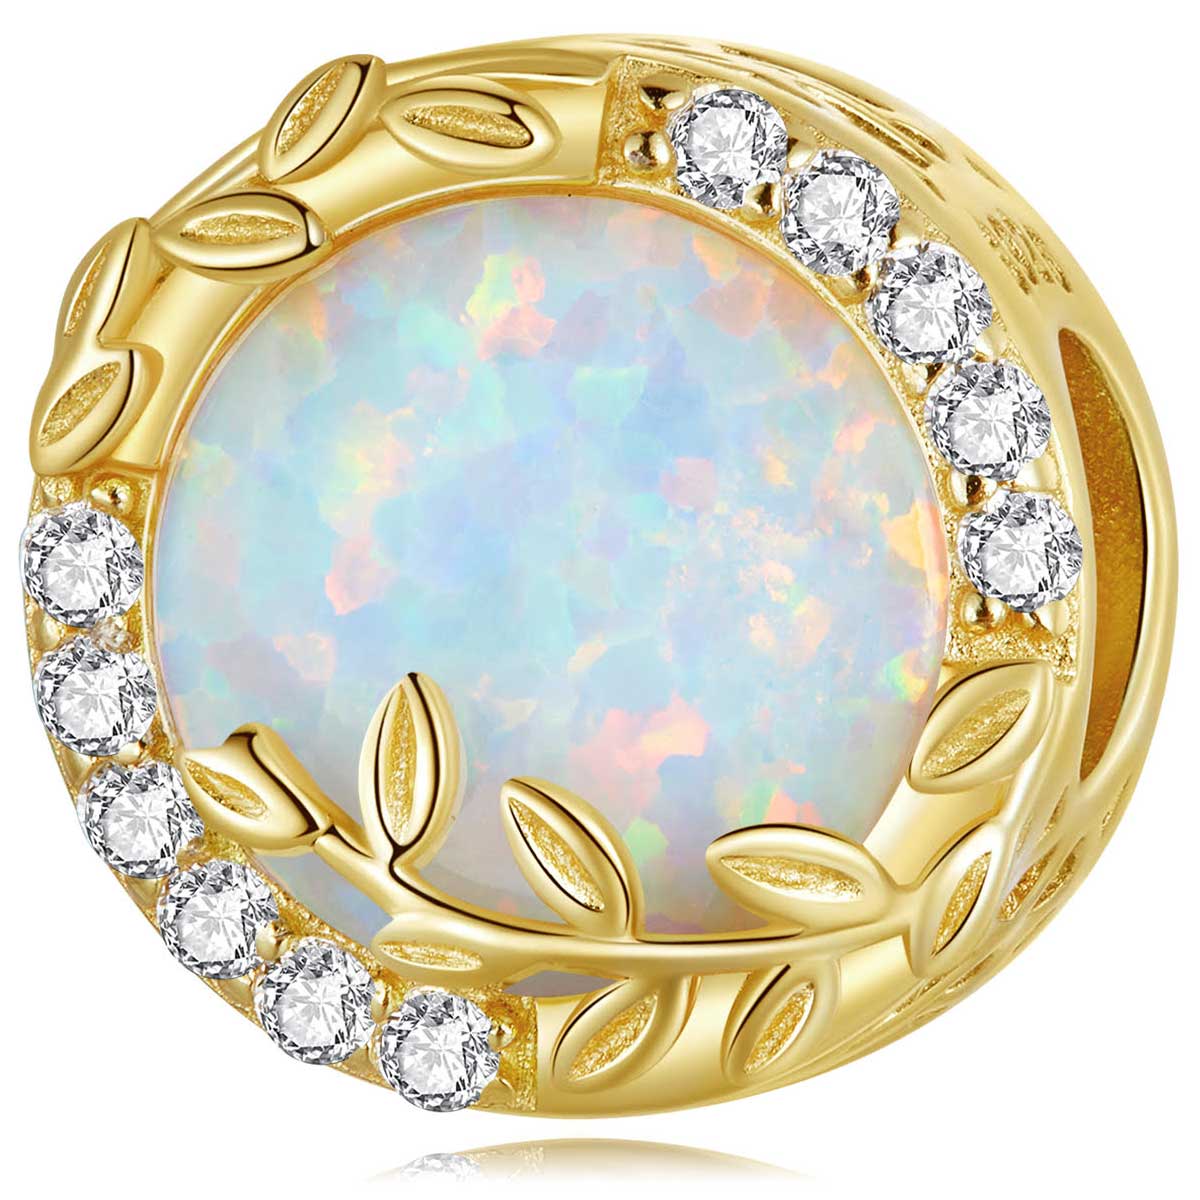 gold opal charm for bracelet